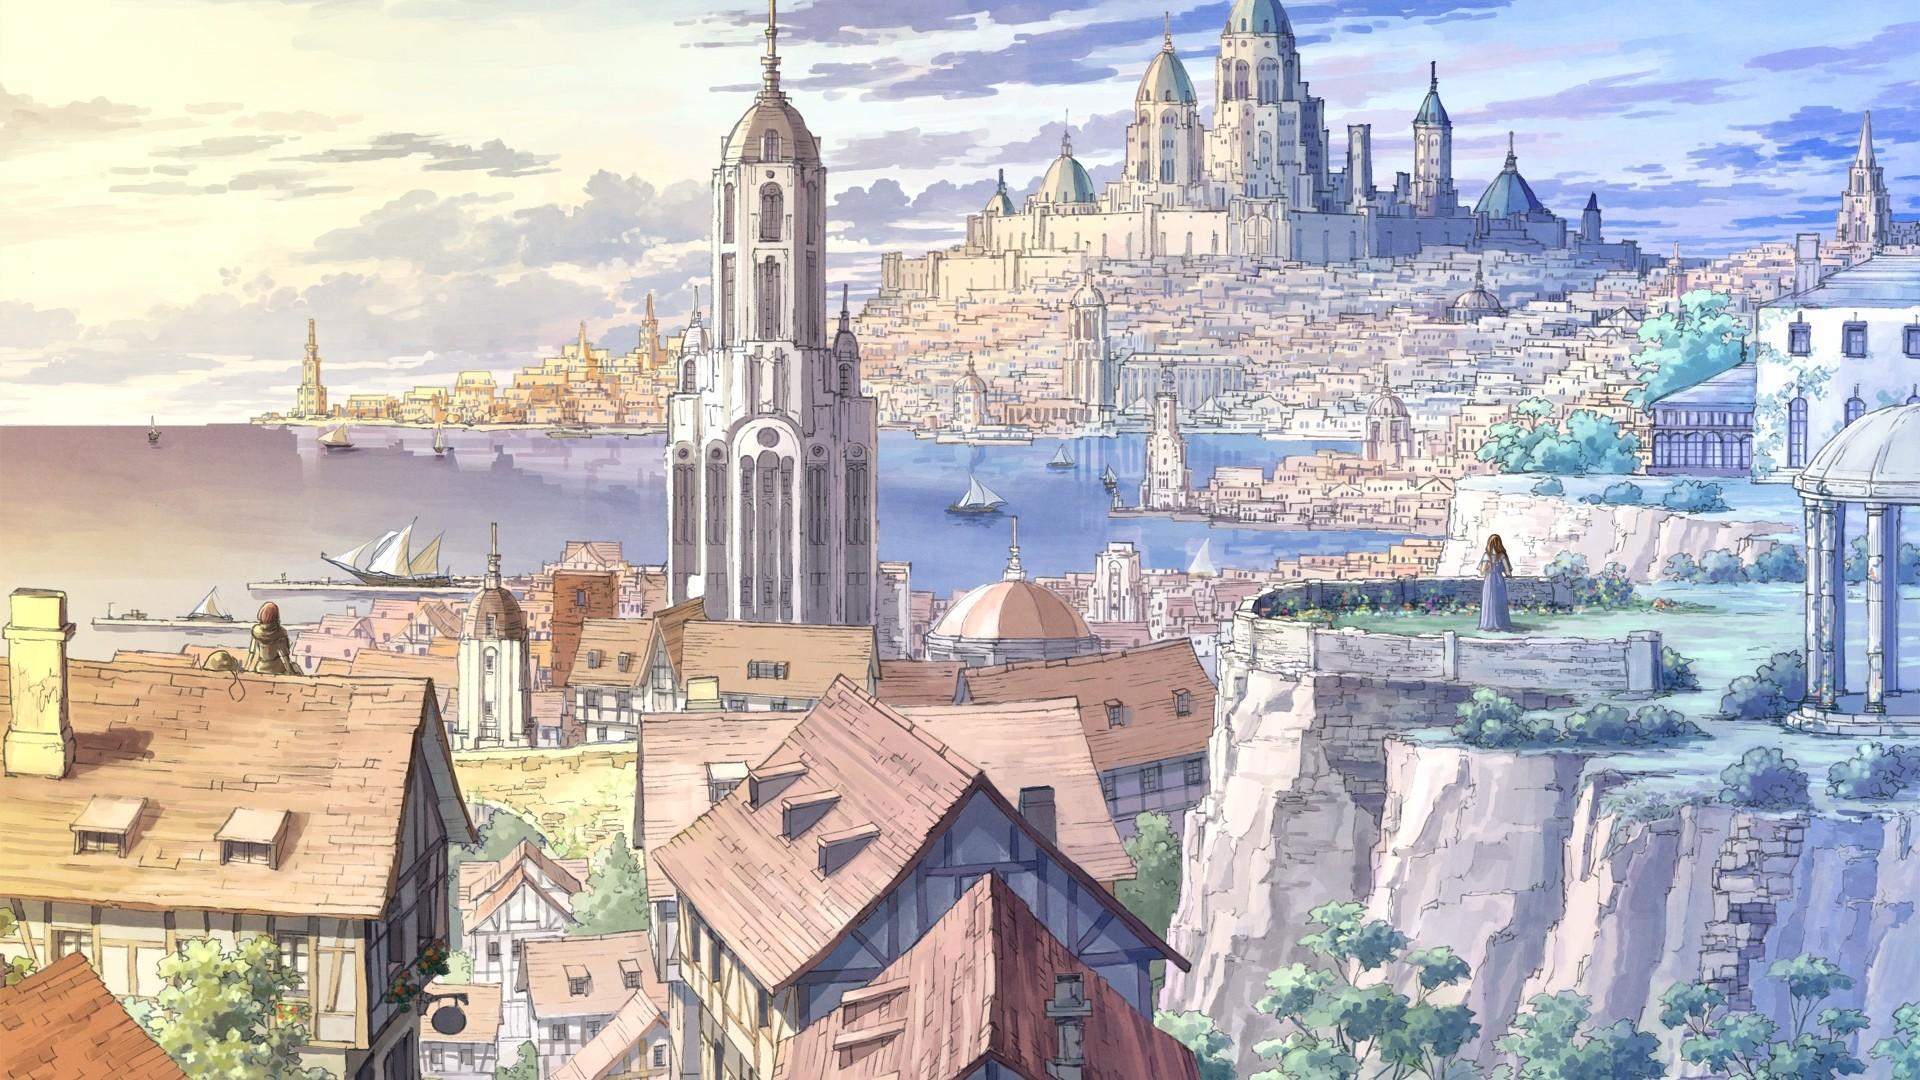 Download Anime City Art Wallpaper 67460 1920x1080 px High